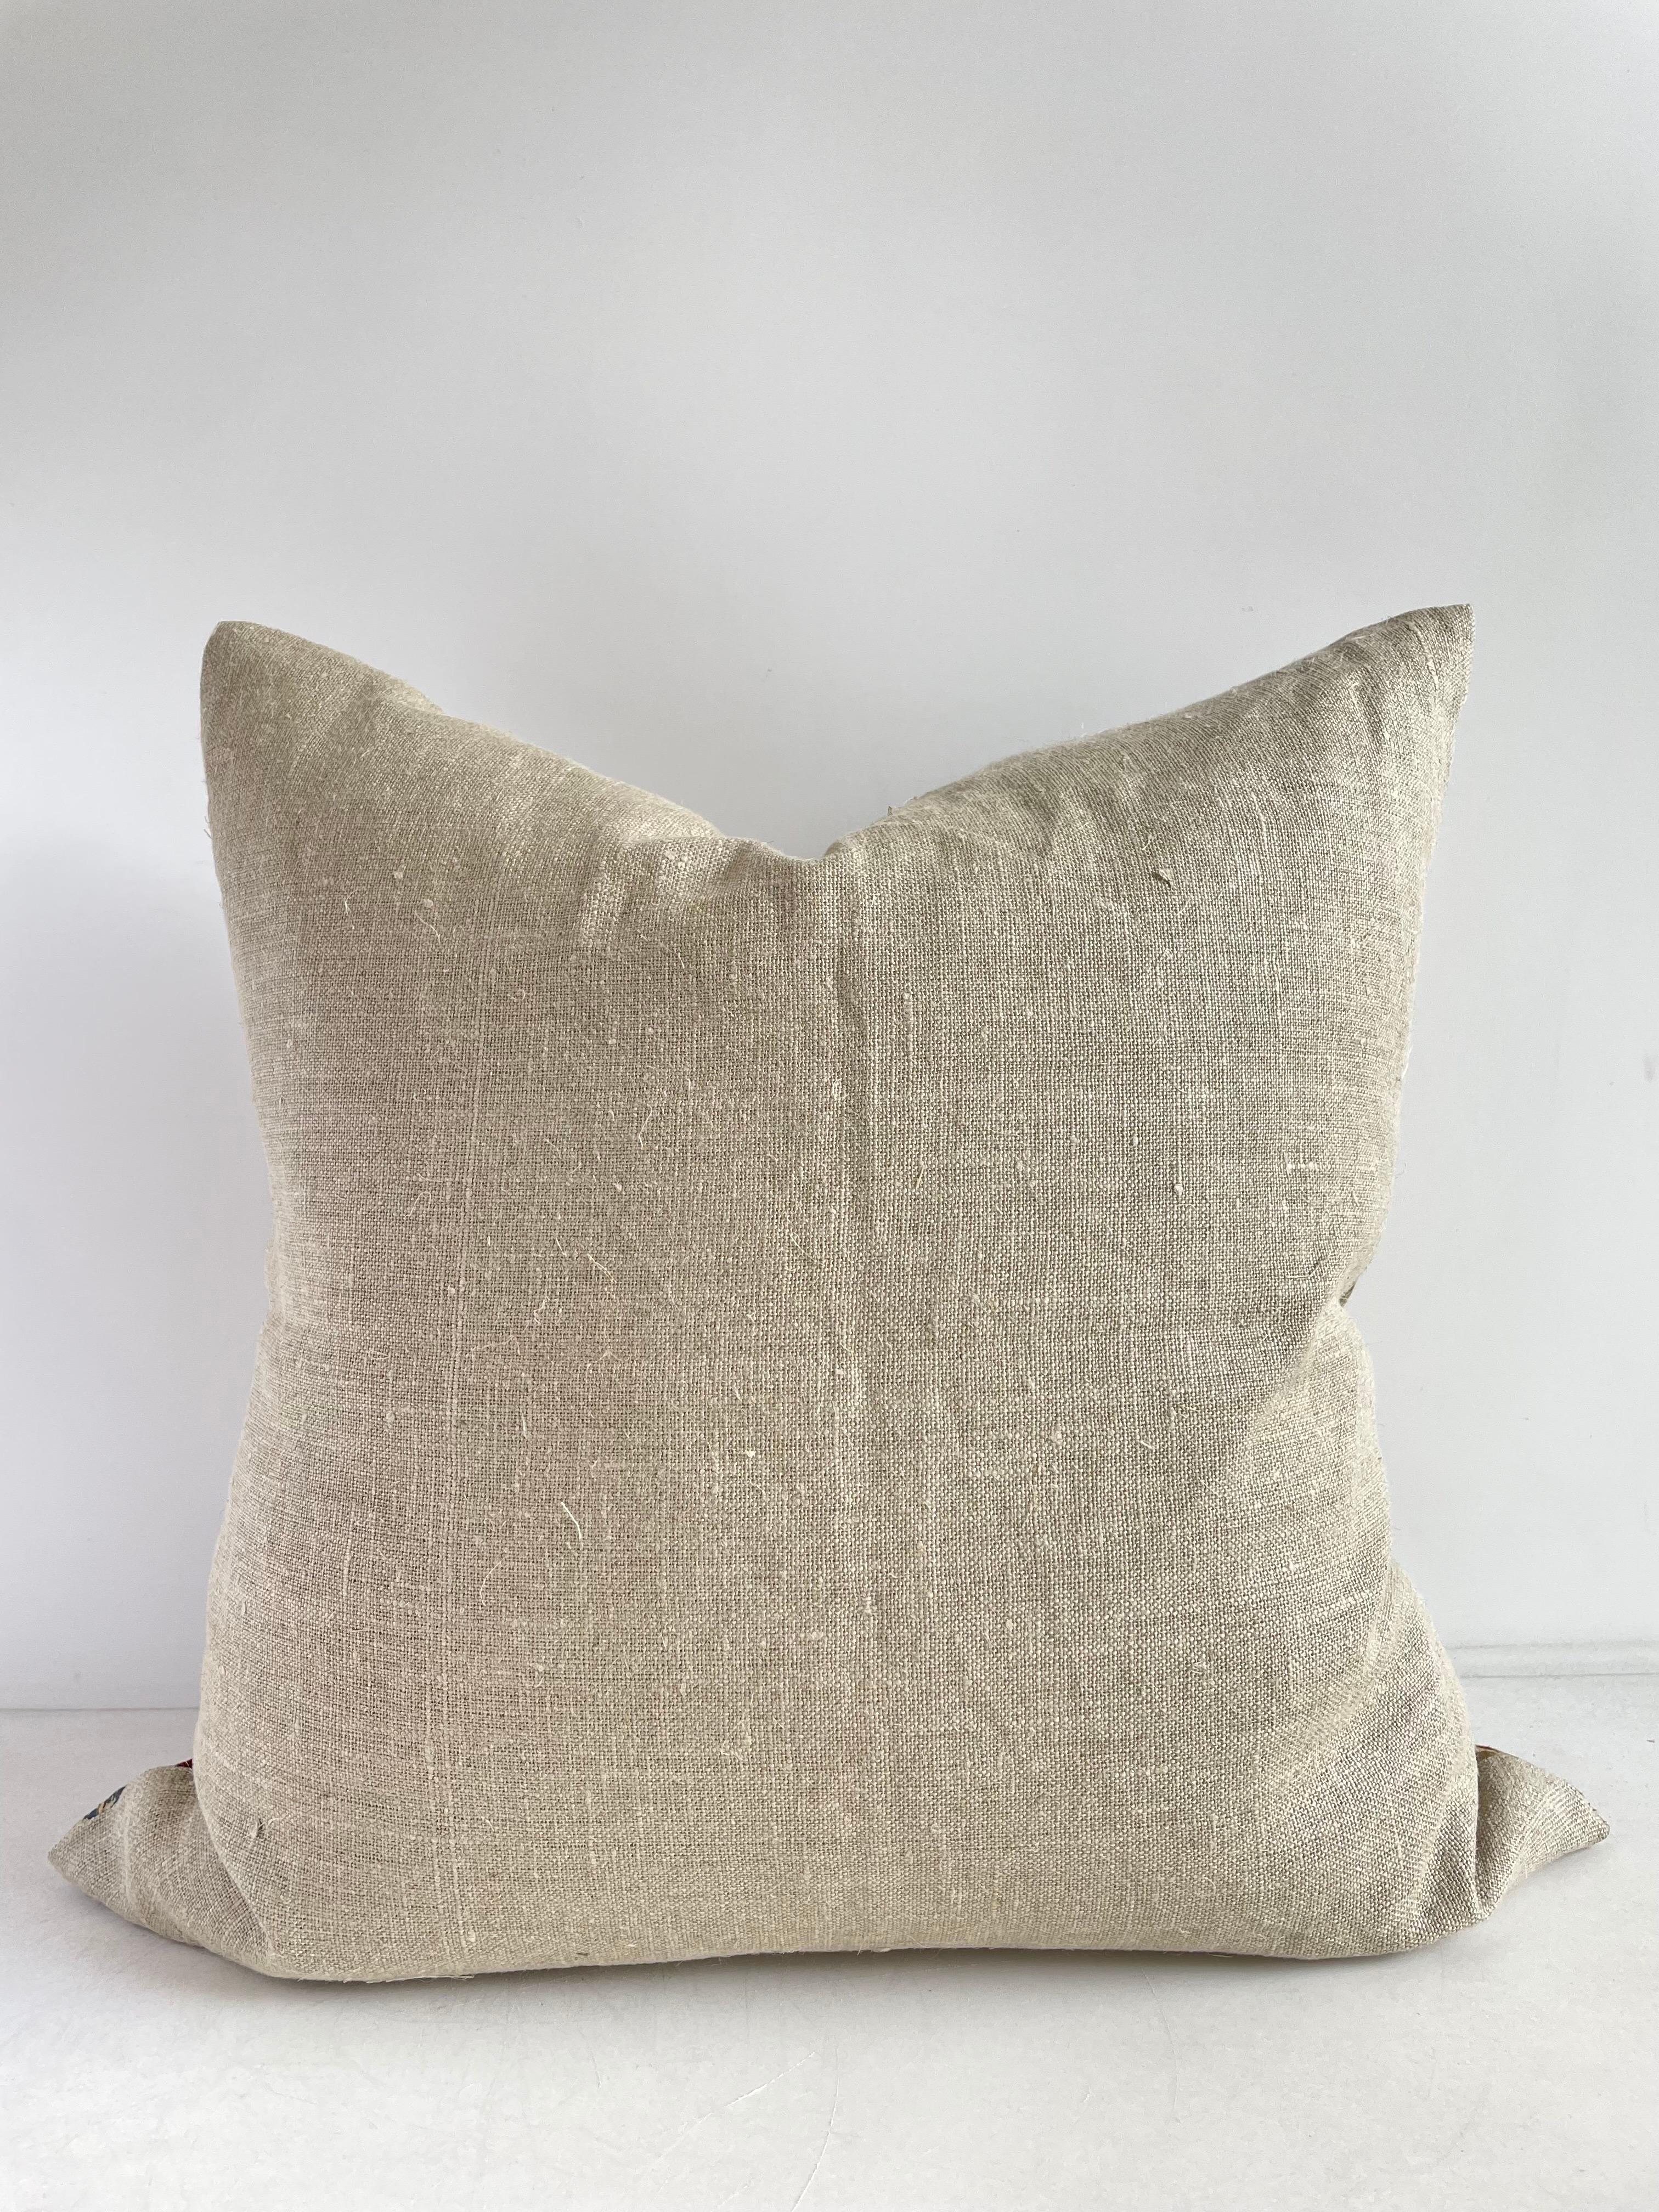 Hand Block-Printed Pillow 1